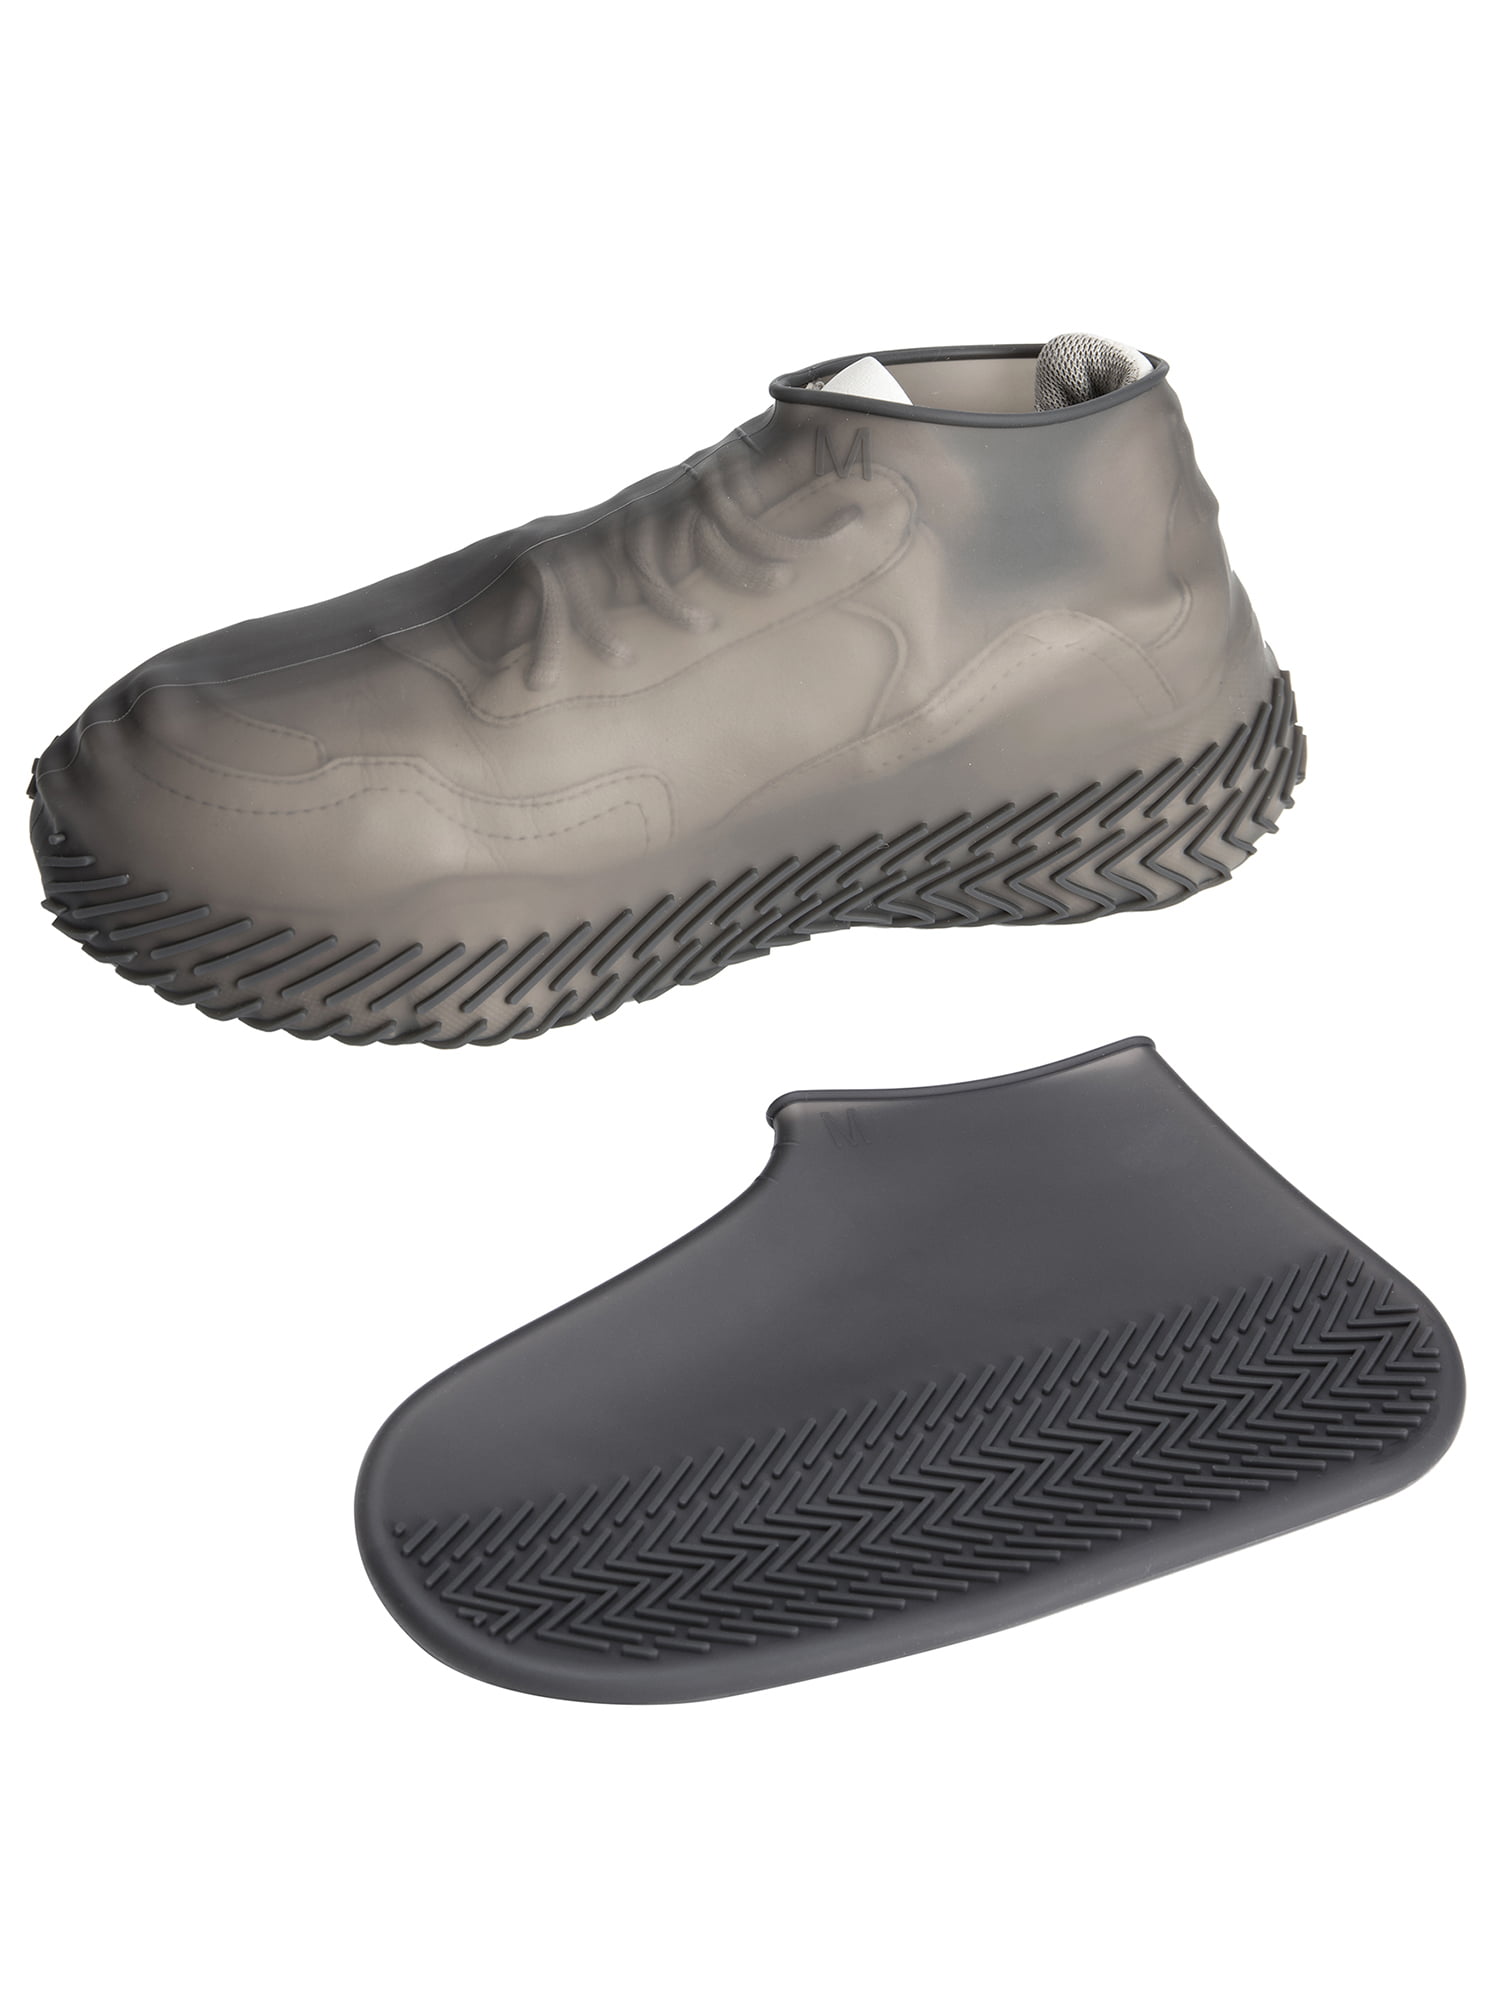 FLORATA Silicone Rain Waterproof Shoes 